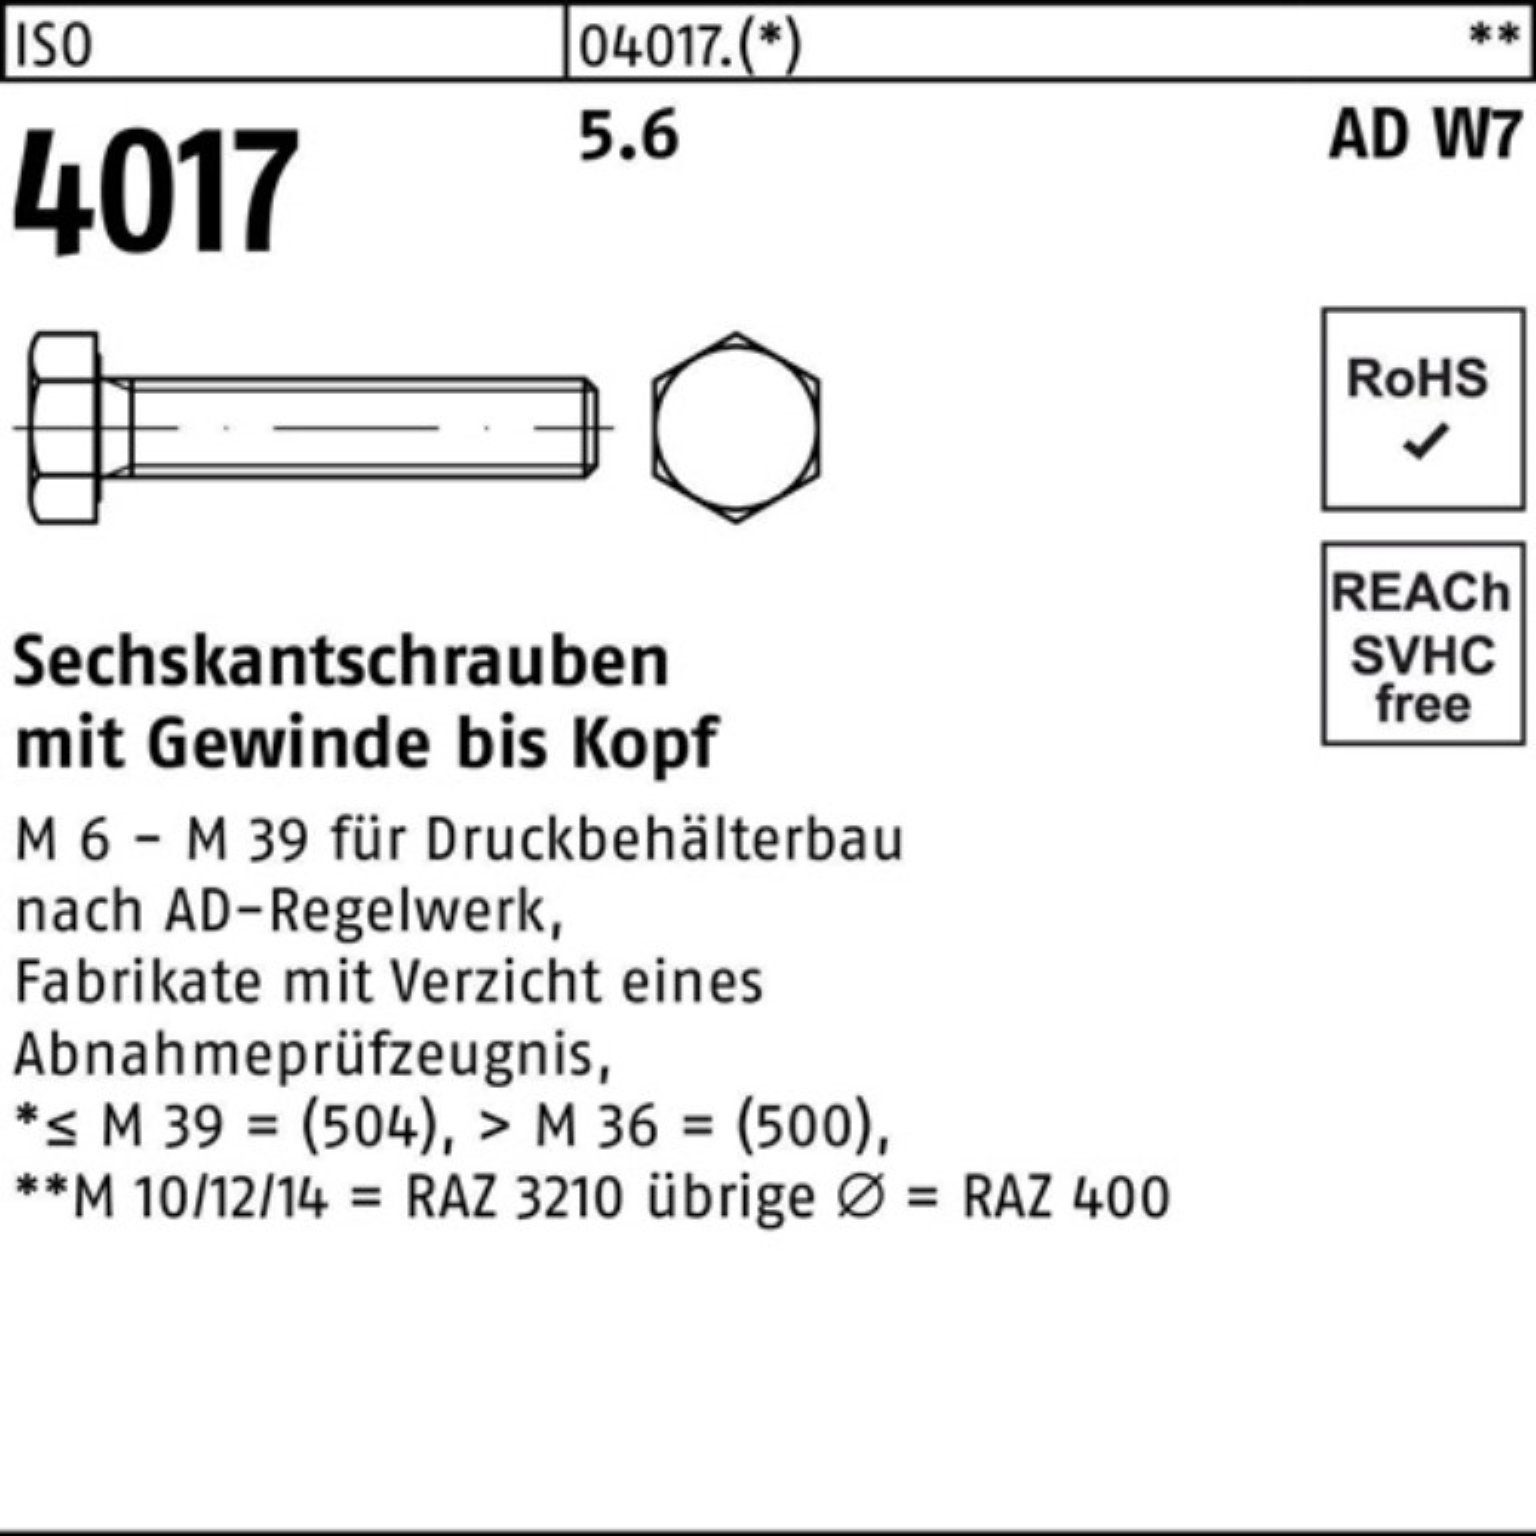 Bufab Sechskantschraube 100er Pack Sechskantschraube ISO 4017 VG M12x 60 5.6 AD W7 100 Stück